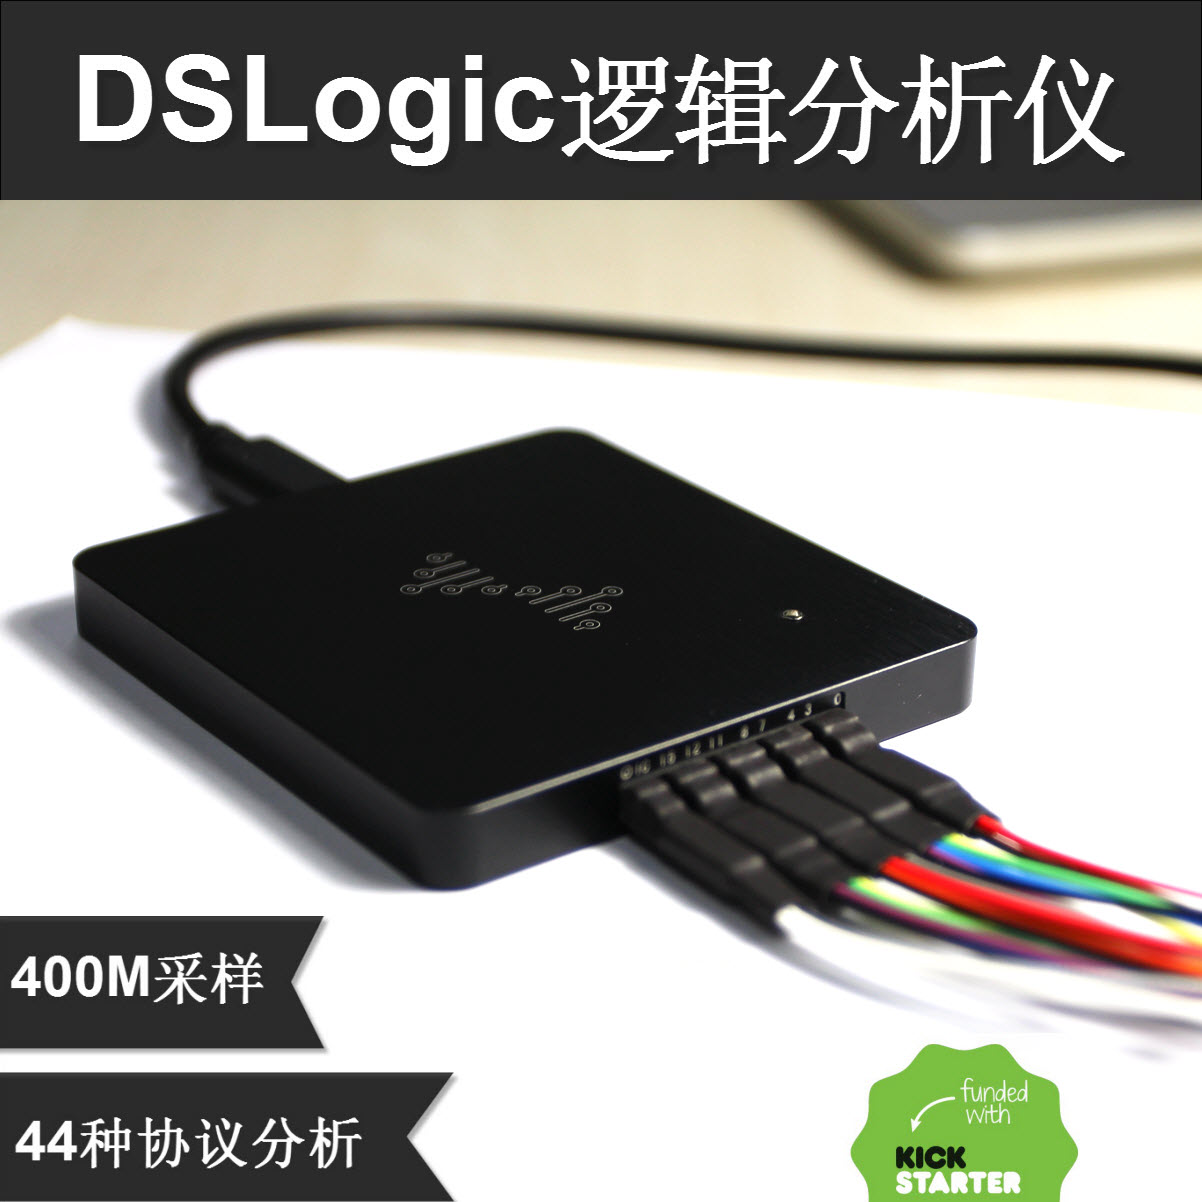 DSLogic Logic analyzer 5 times saleae bandwidth up to 400M sampling 16-channel debugging assistant